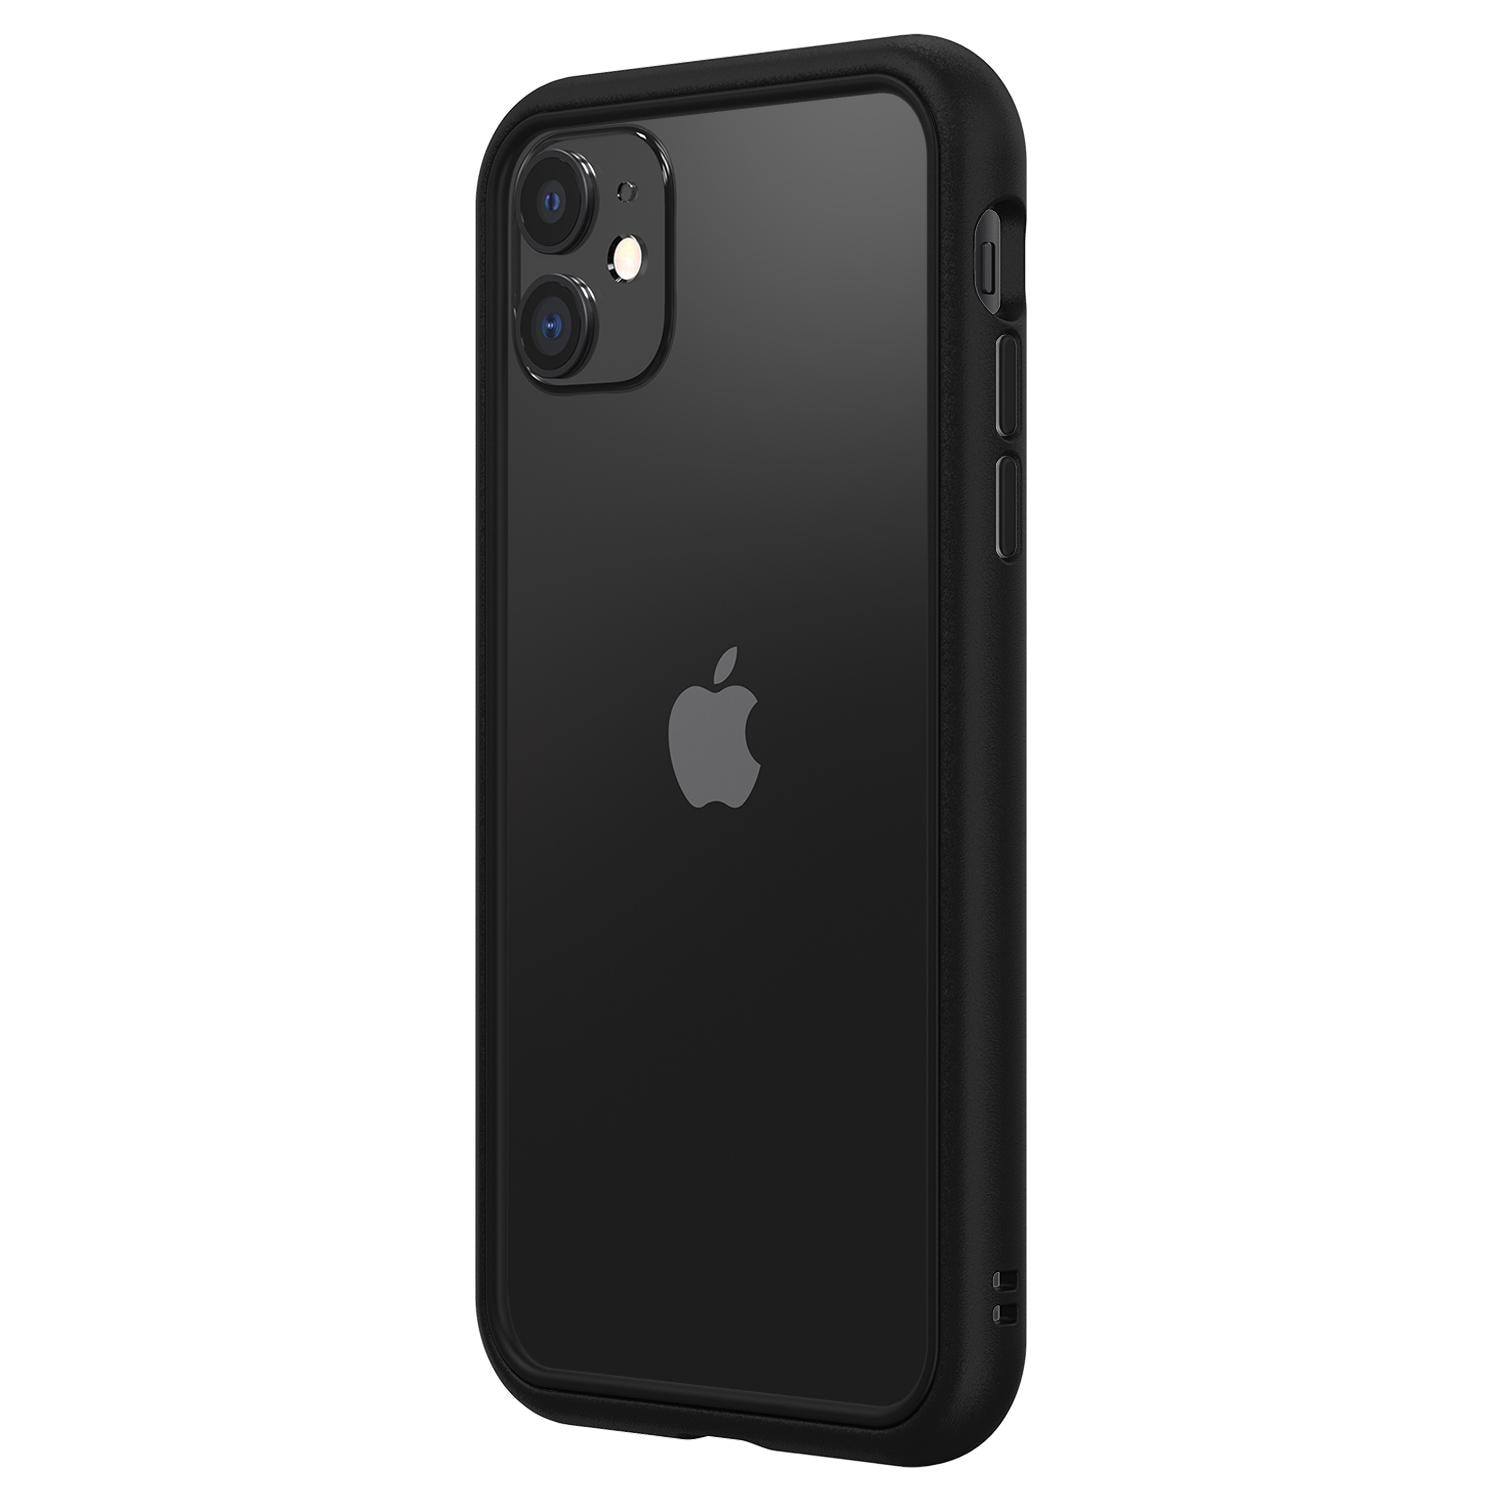 Айфон 11 про черный. Iphone 11 черный. Айфон XR Black in Case. Айфон 11 черный болты. Zagg iphone 11.